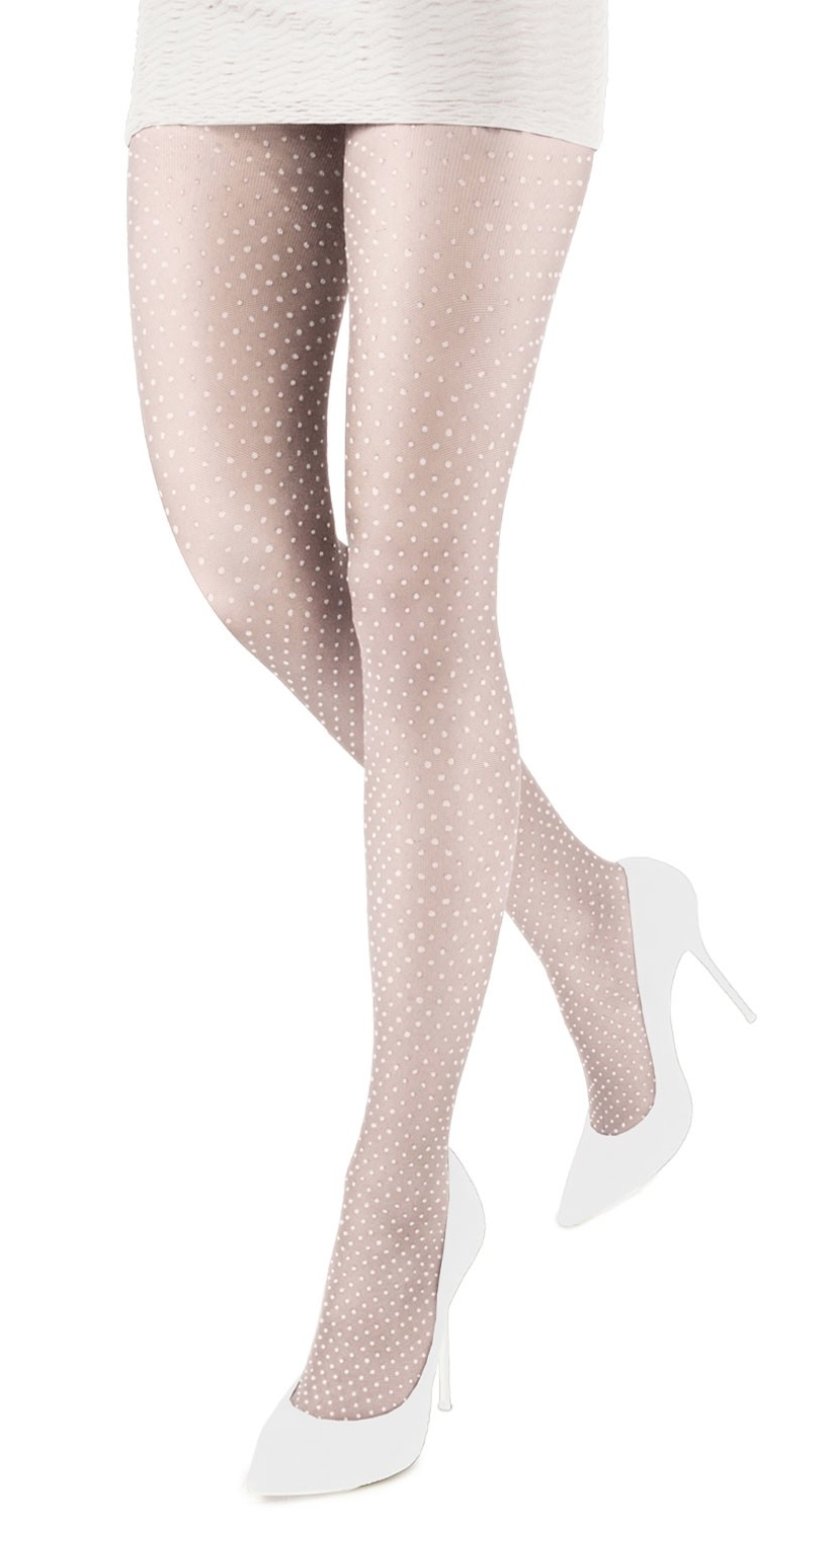 Emilio Cavallini 5619.1.88 All Over Dot Tights - white micro mesh fashion tights with polka dot spot pattern